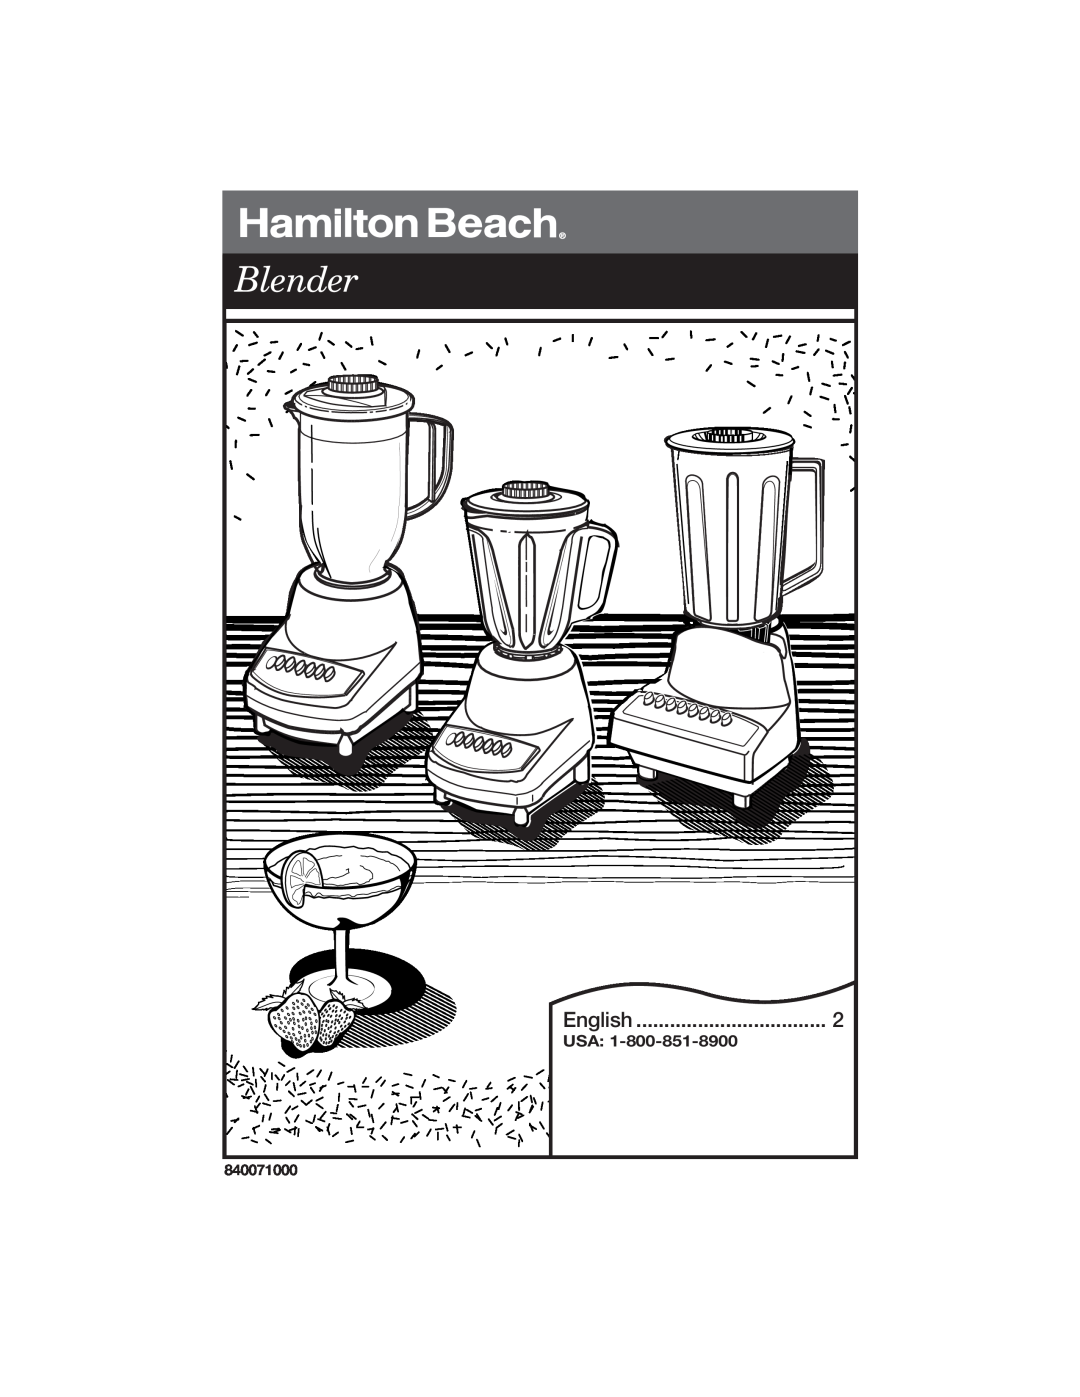 Hamilton Beach 840071000 manual English, Blender, Usa 